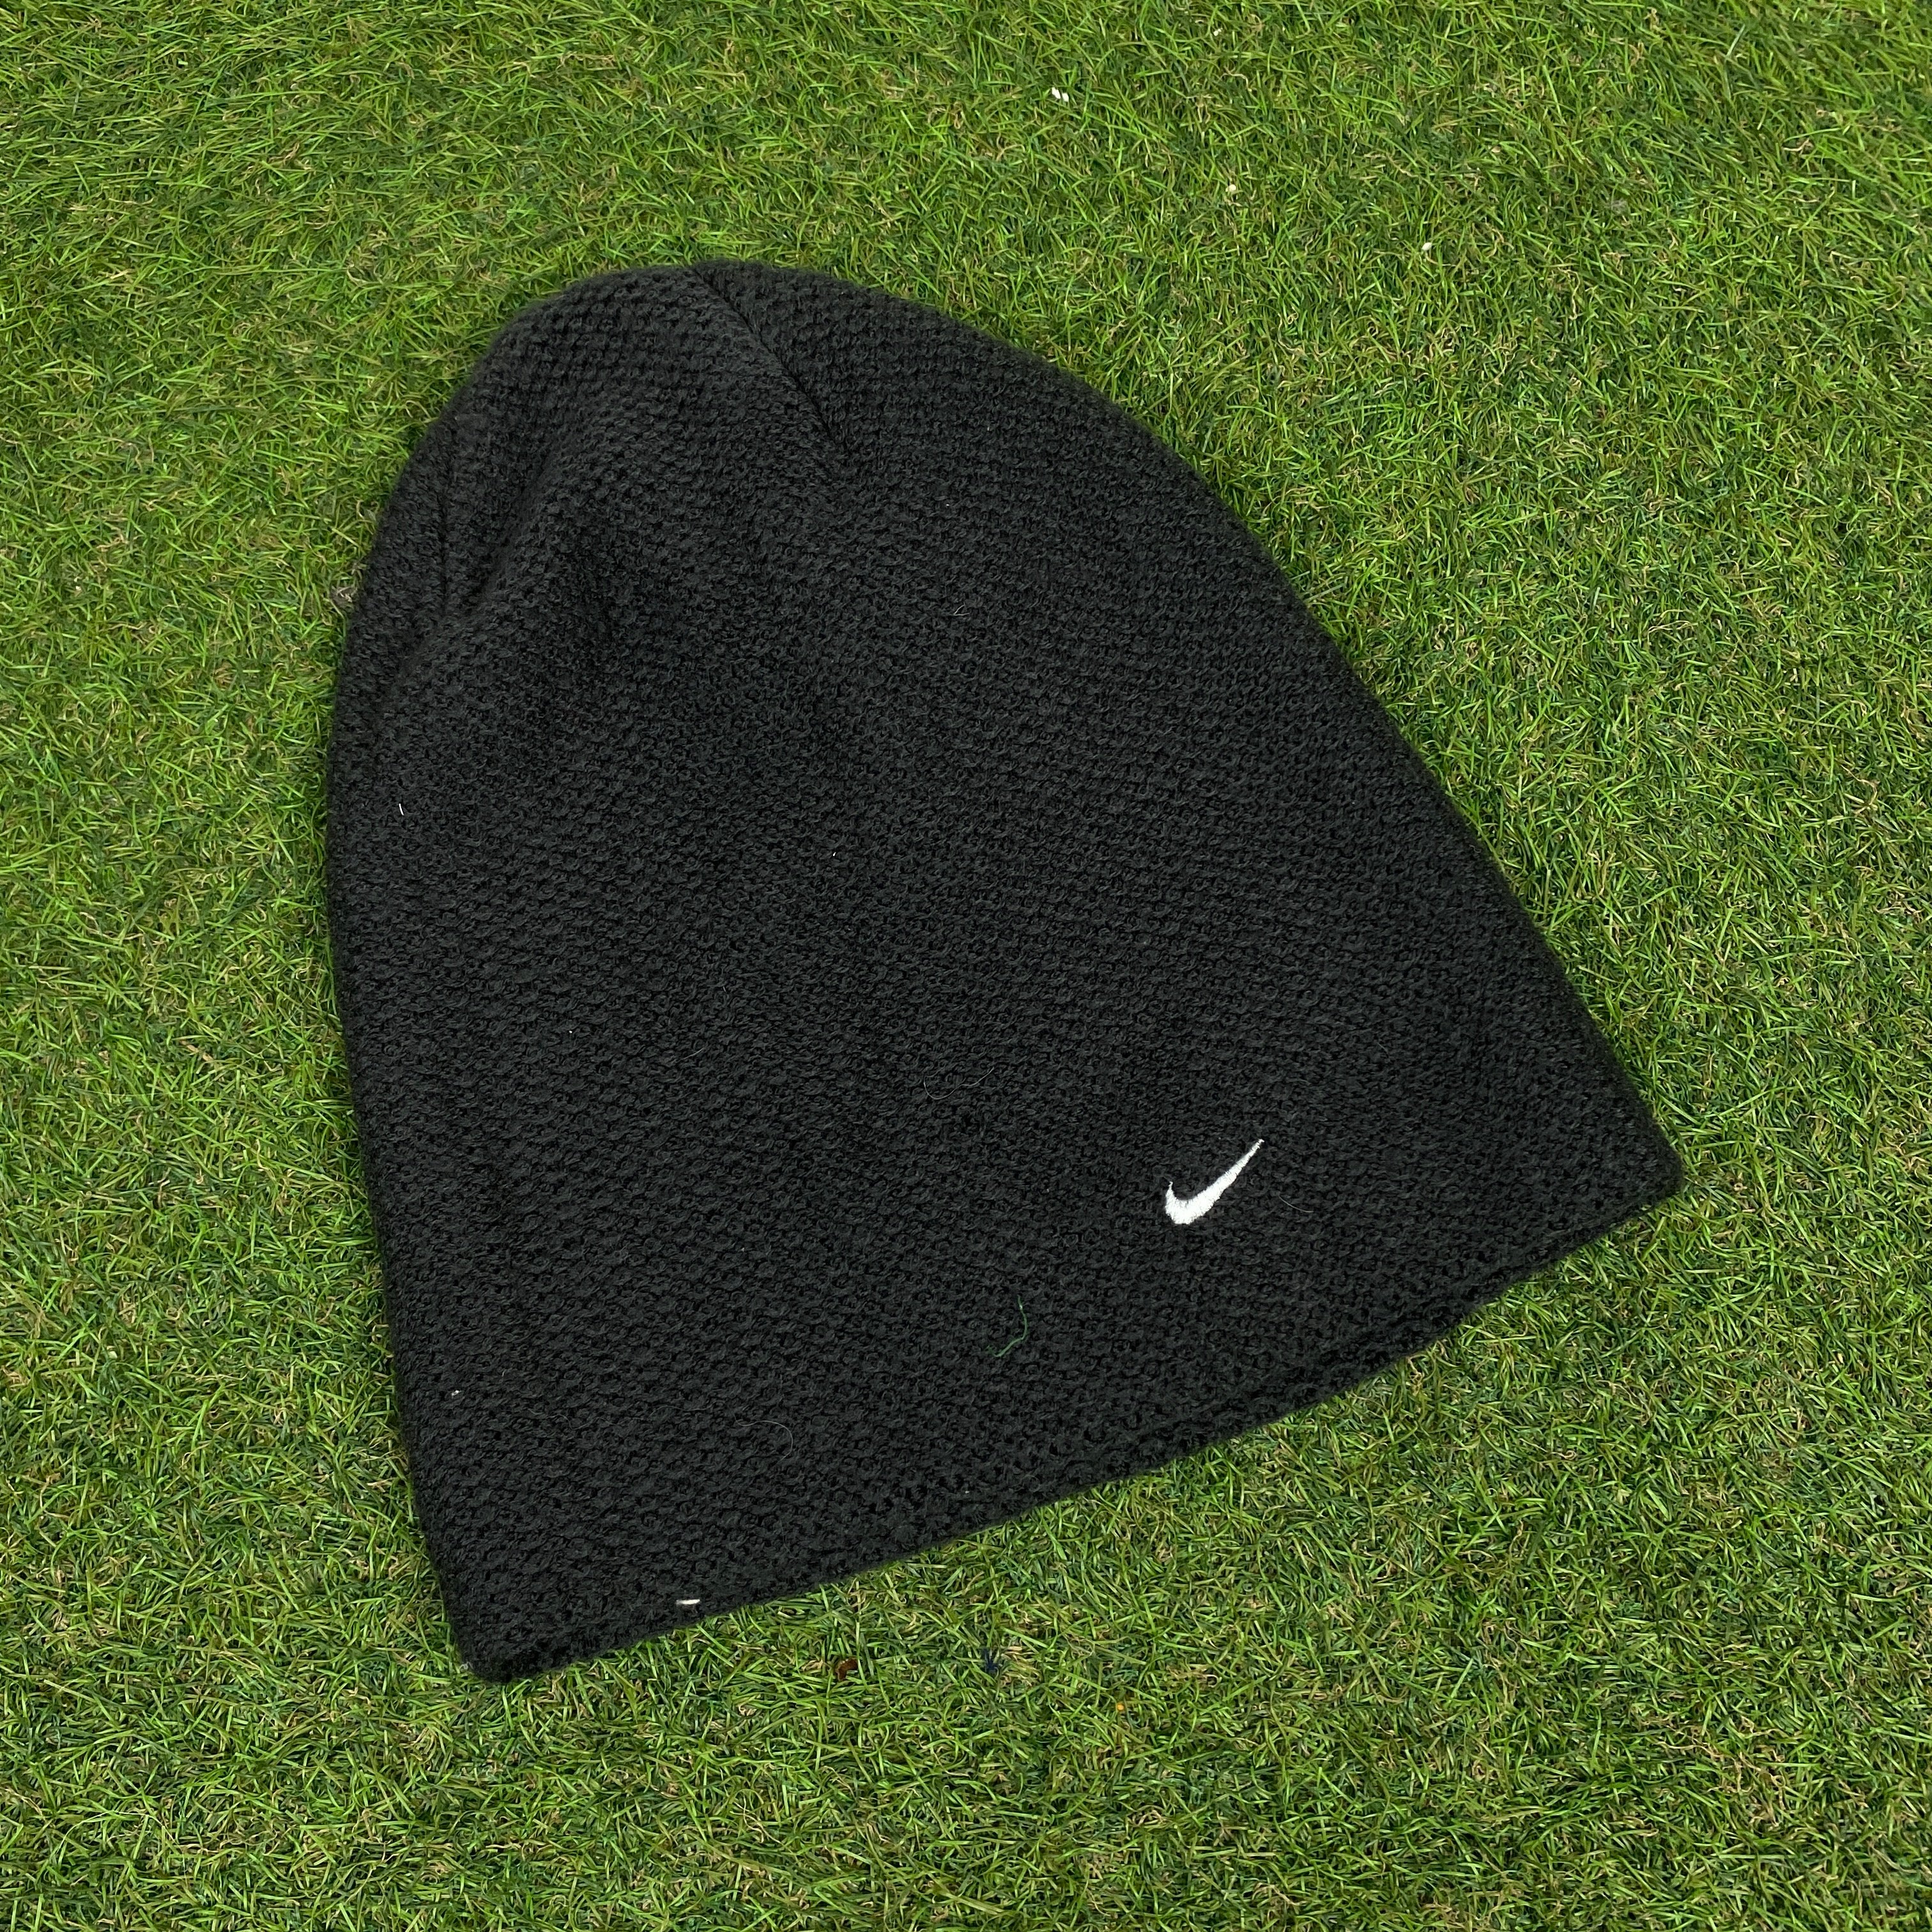 00s Nike Presto Knit Beanie Hat Black